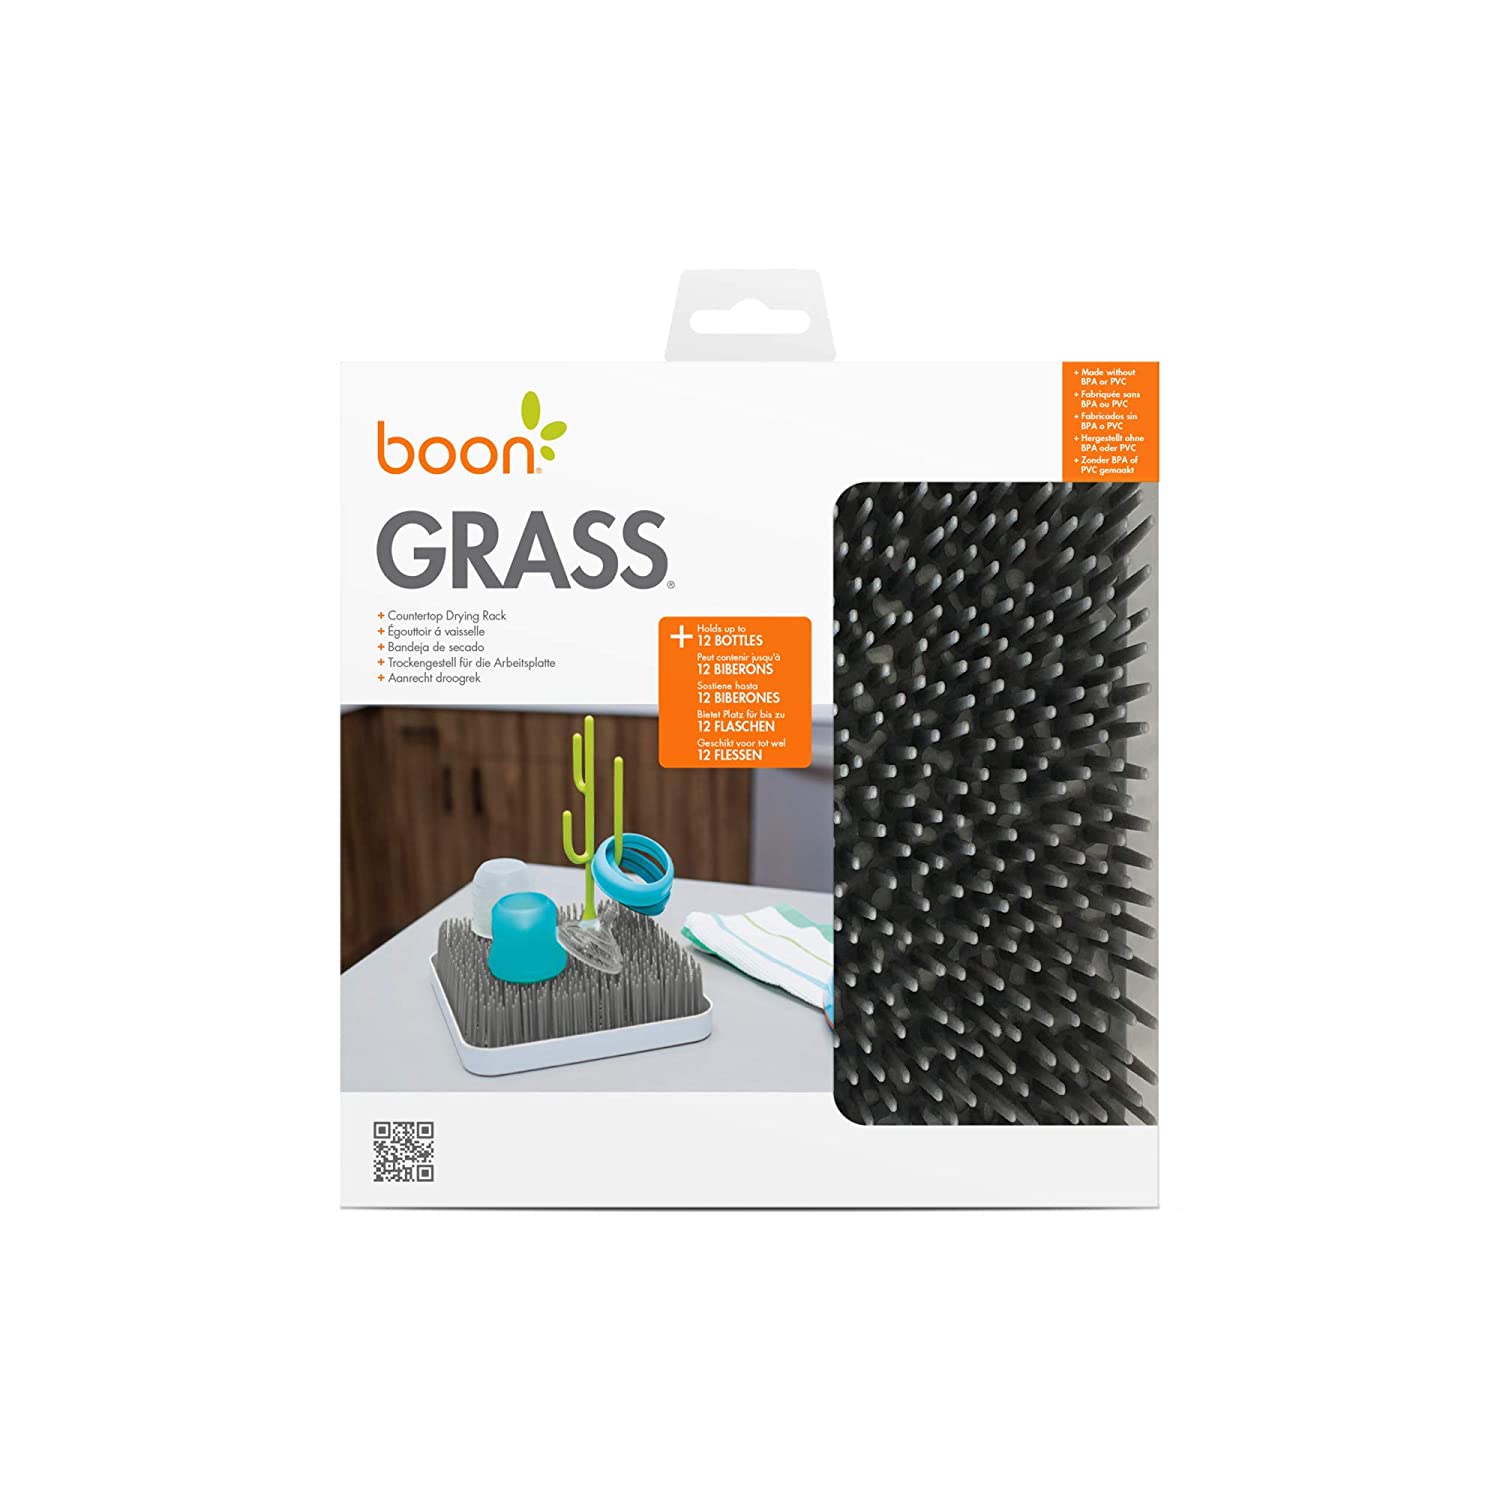 Boon Grass Countertop Drying Rack - ANB Baby -Boon